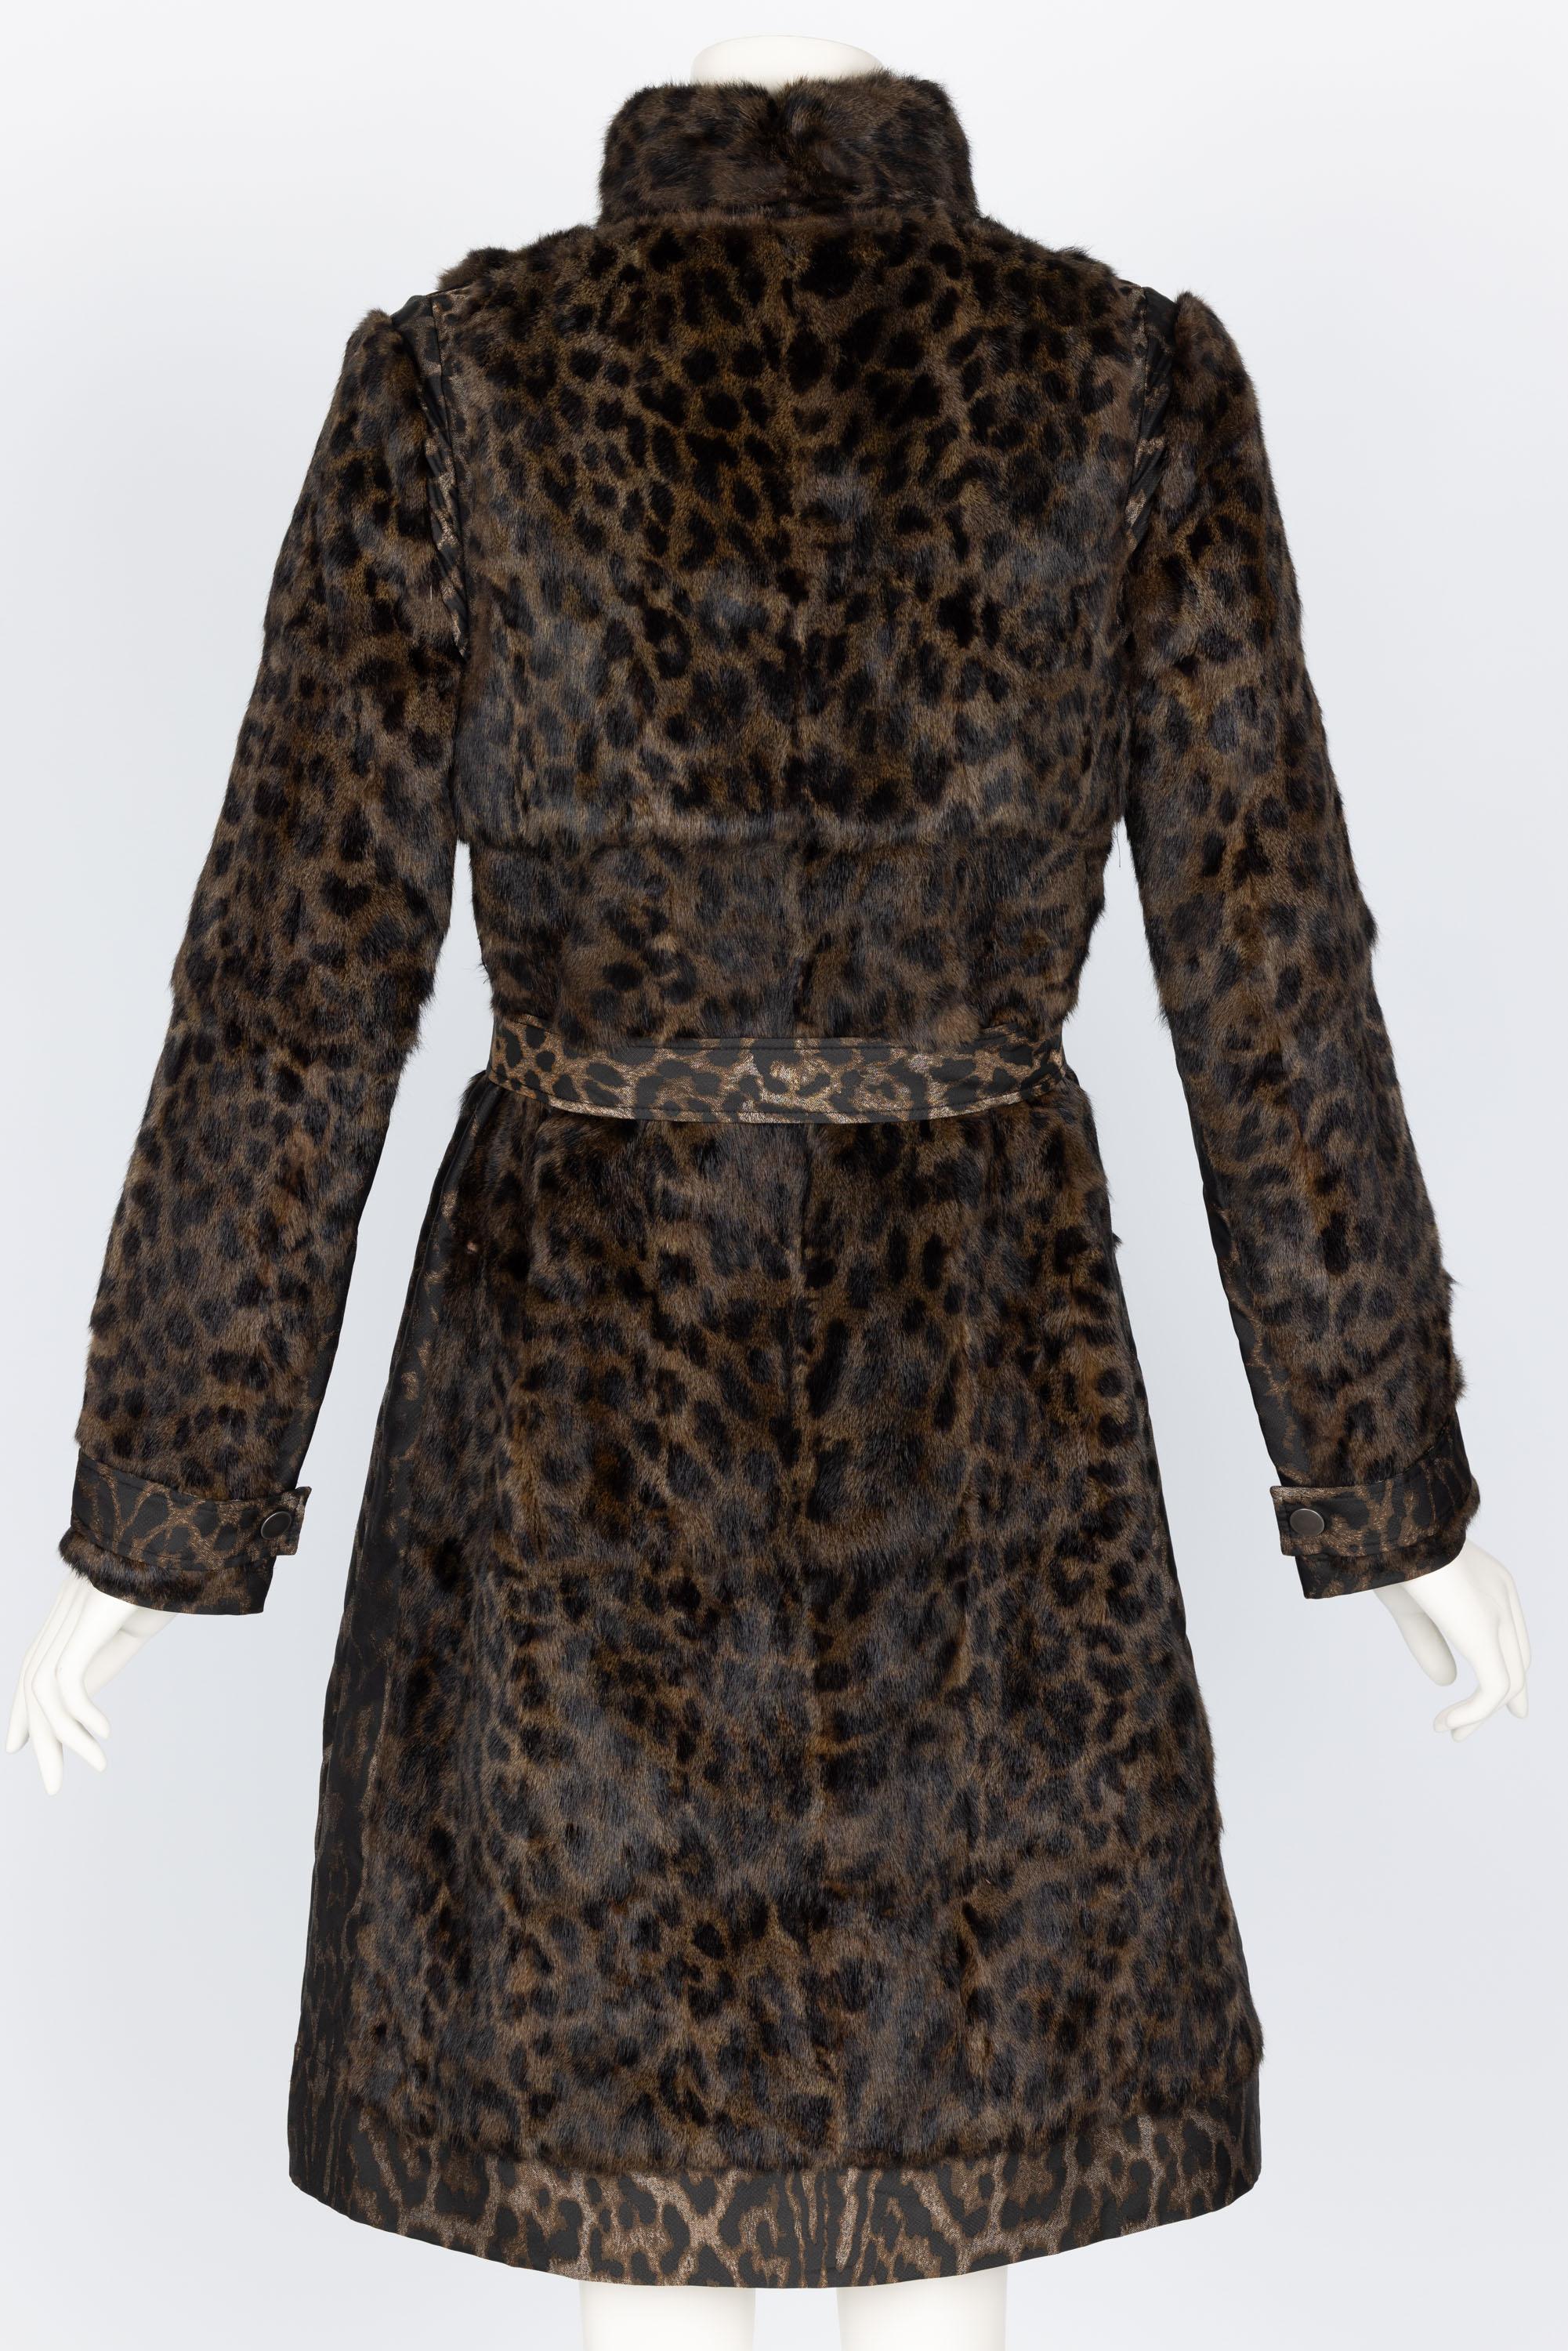 Lanvin Alber Elbaz F/W 2013 Leopard Fur & Taffeta Belted Trench Coat For Sale 1